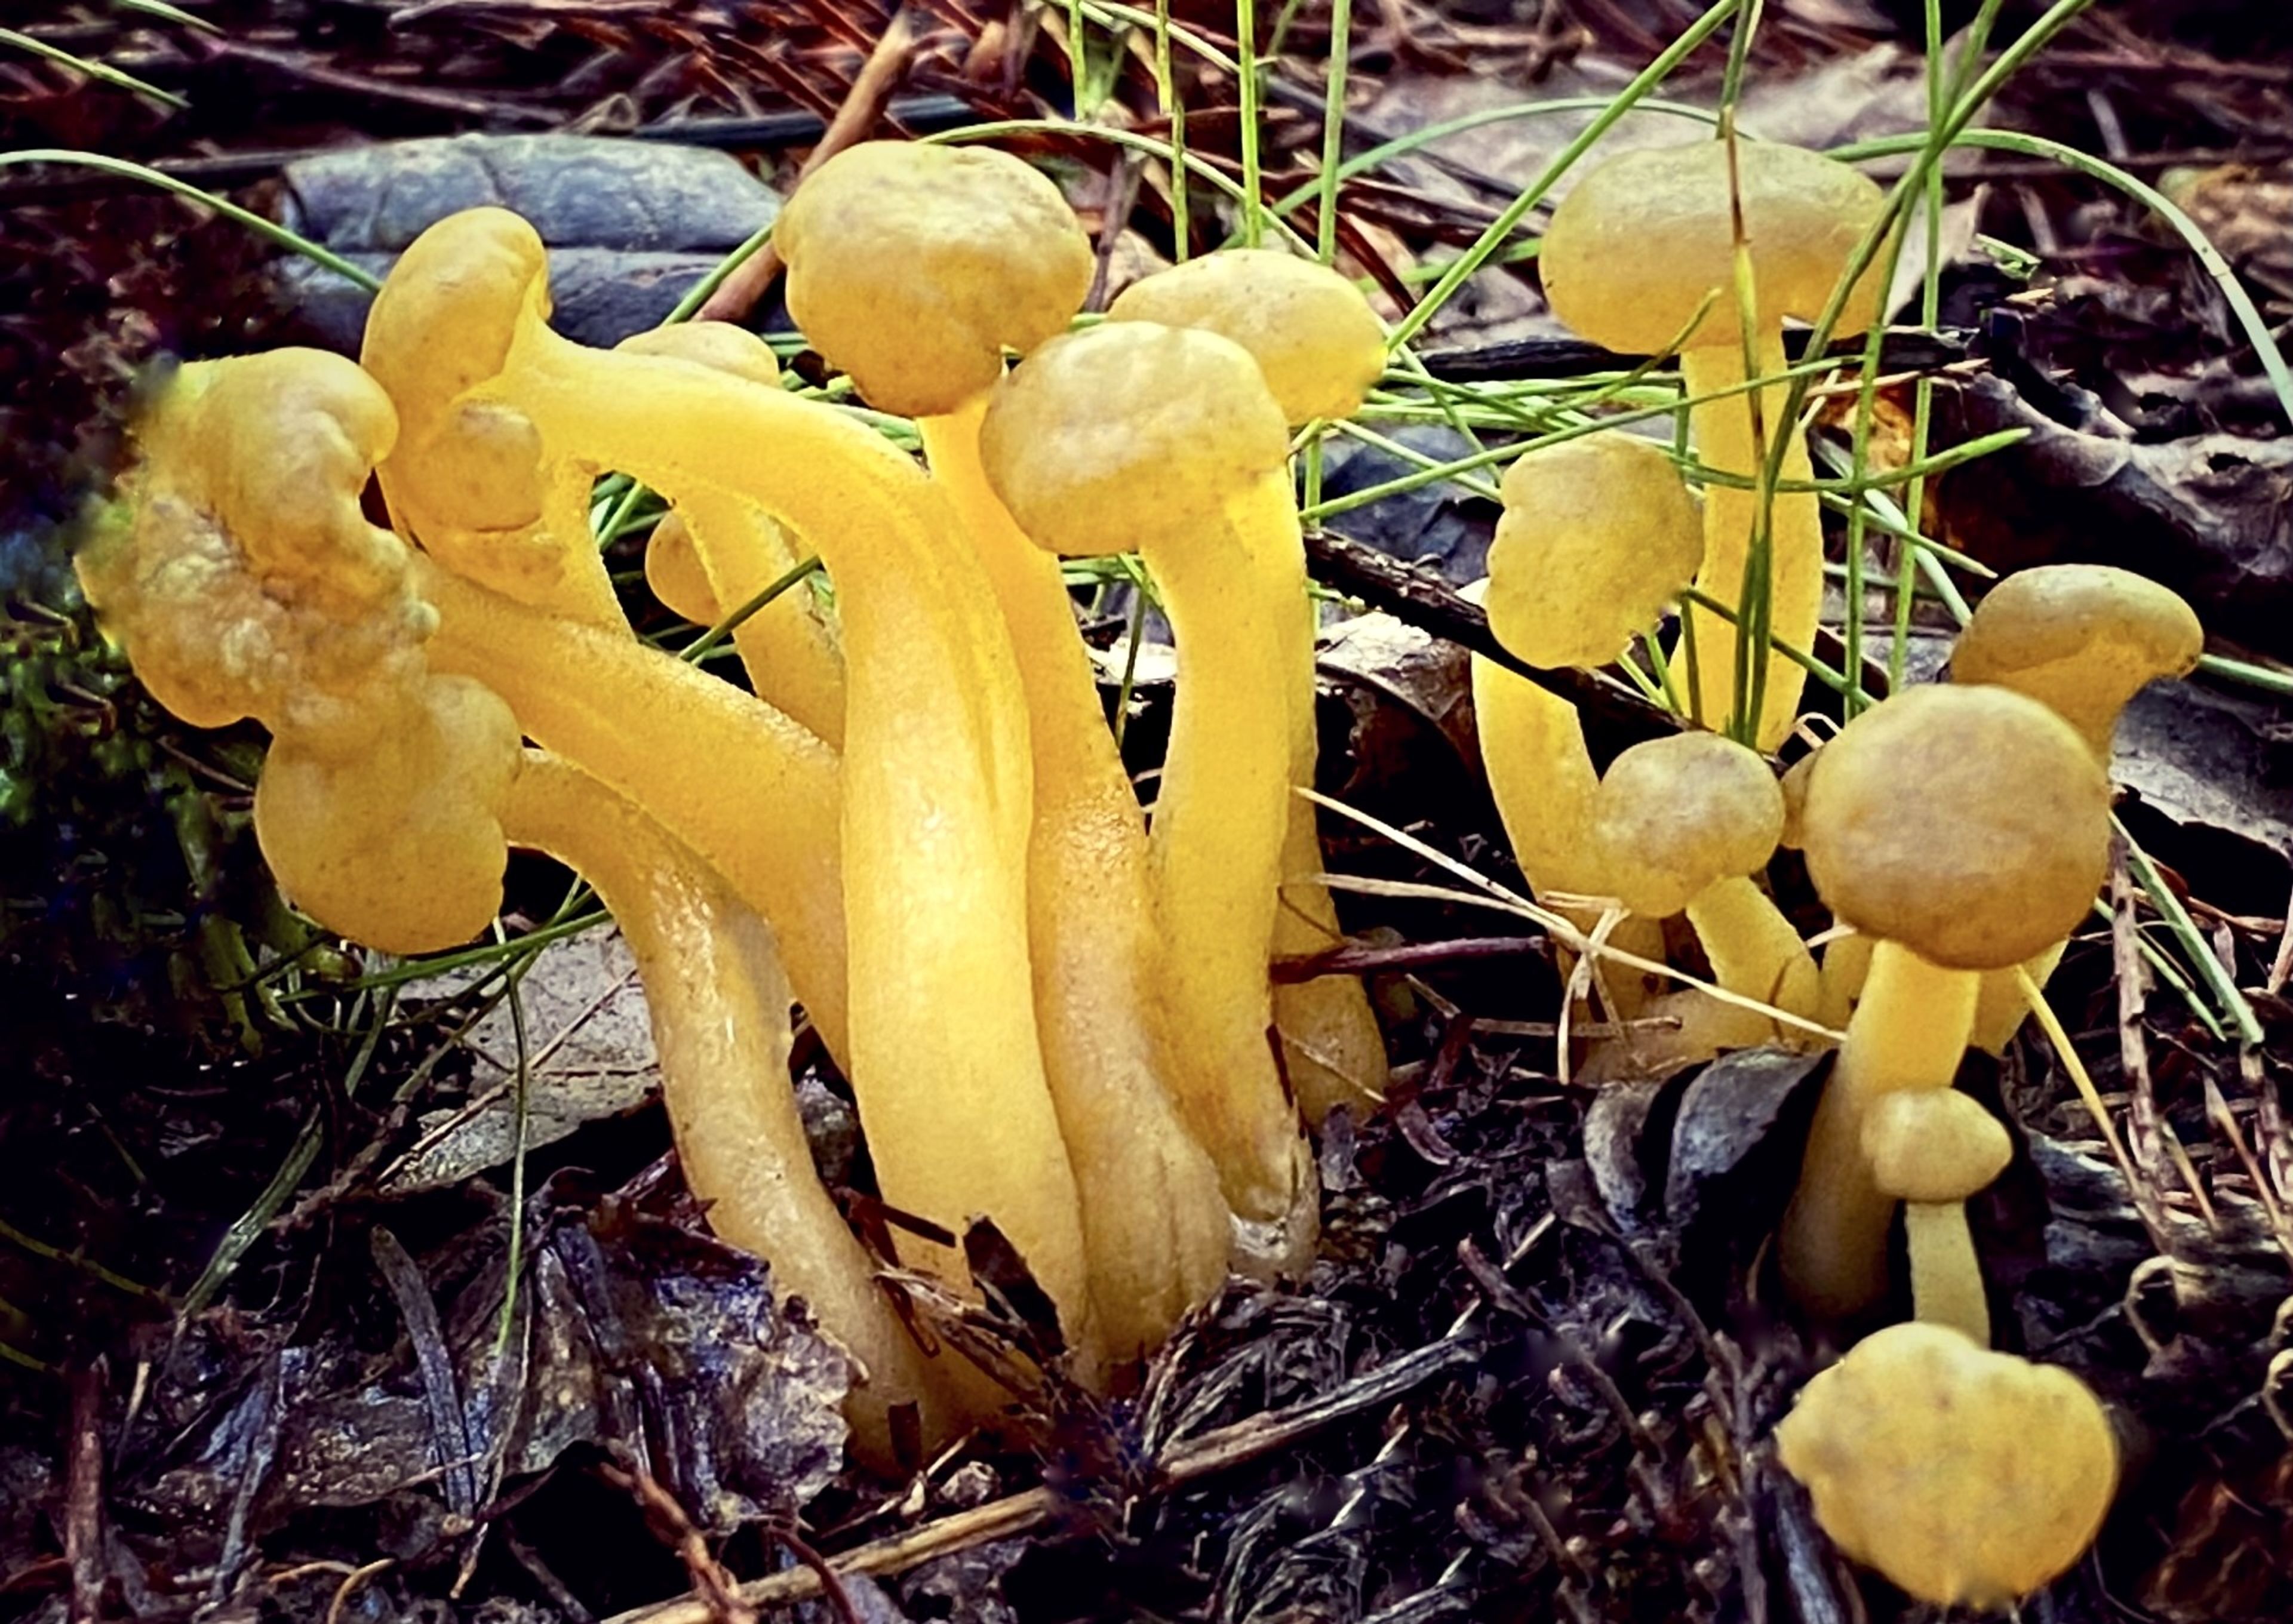 Hidden wonders under the sweetgum canopy: The fleeting life of jelly baby mushrooms